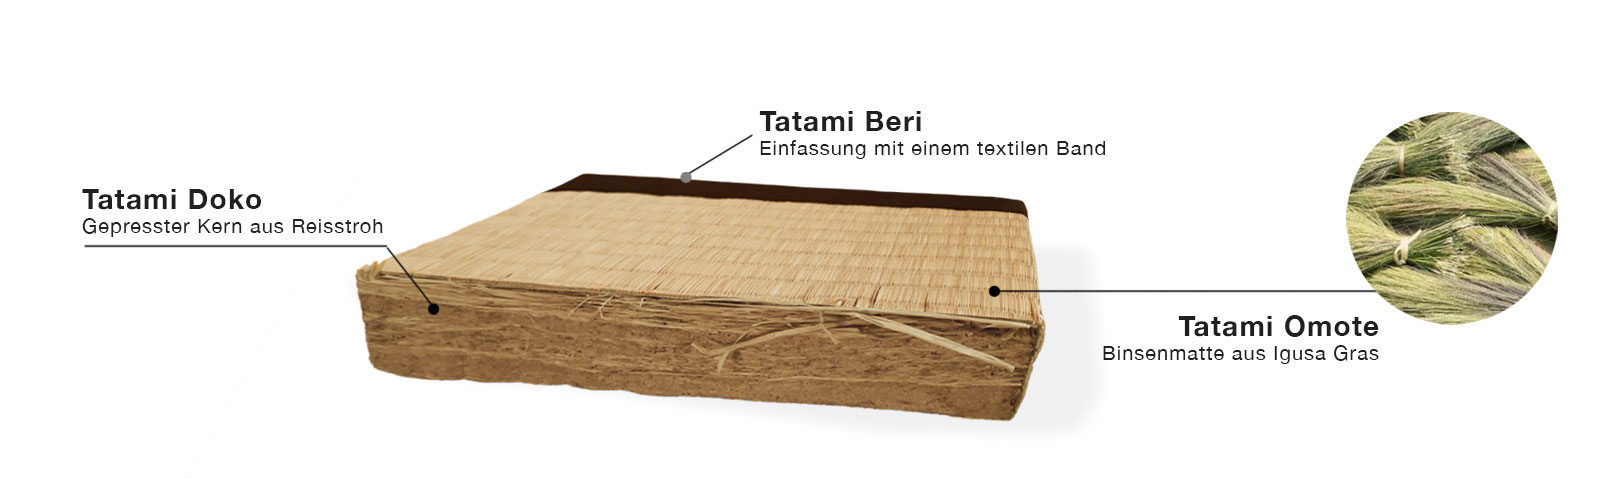 Tatami rice straw mat cross-section